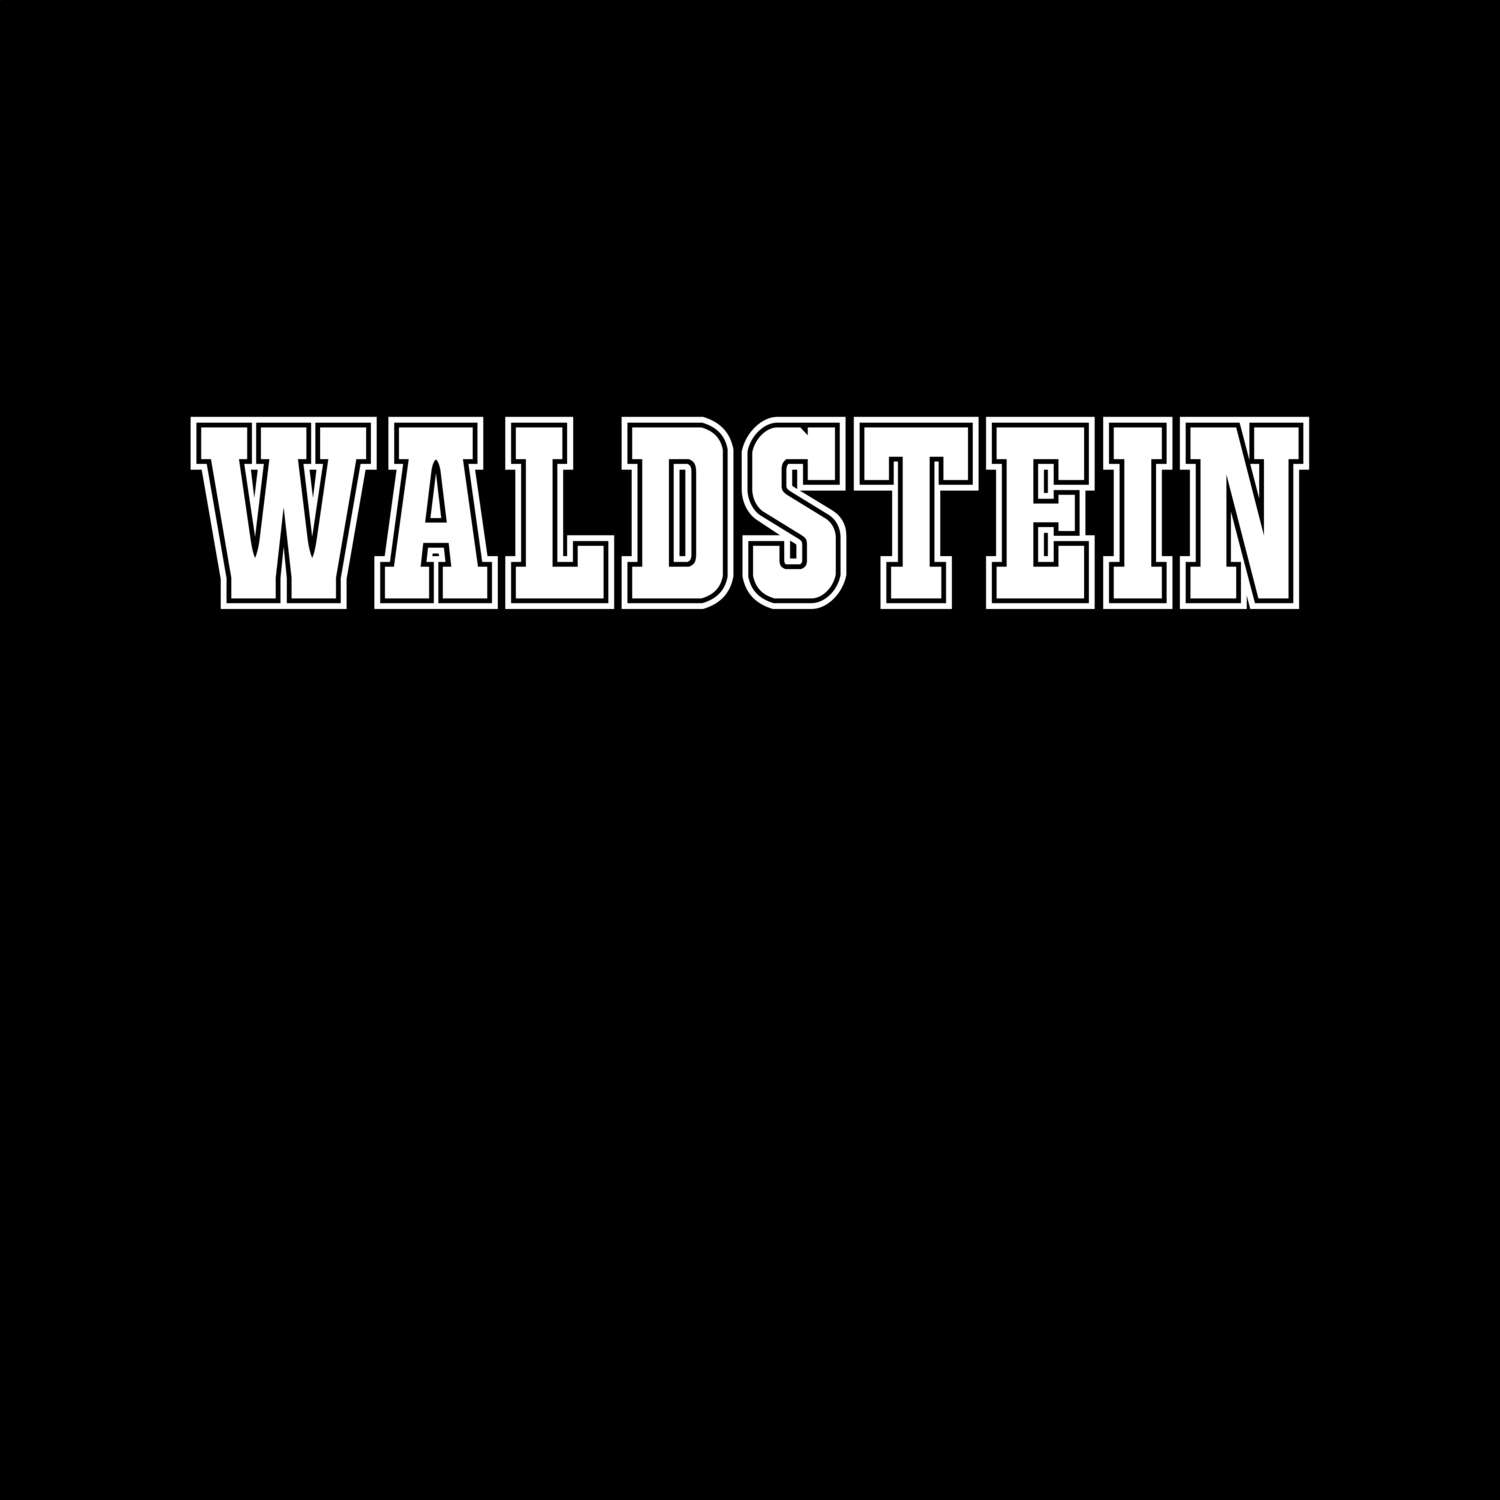 Waldstein T-Shirt »Classic«